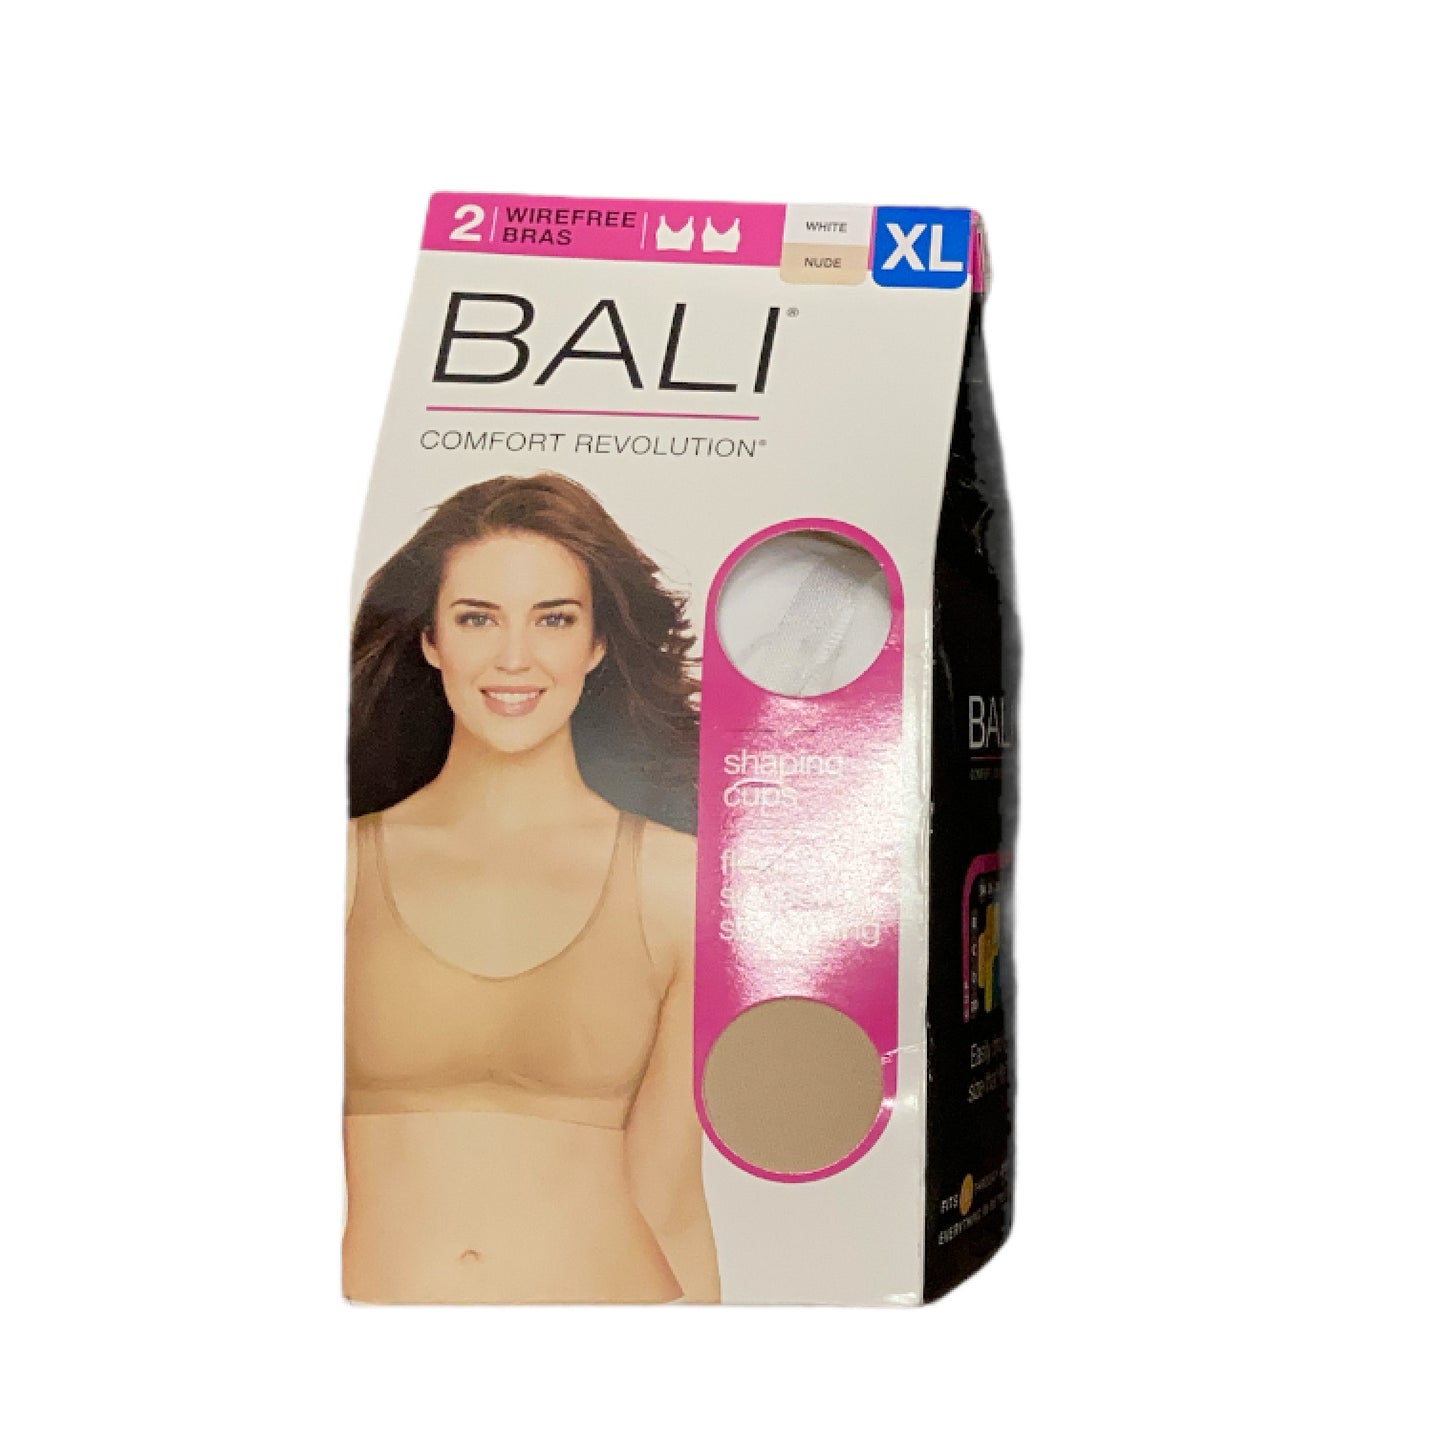 Bali Women's Comfort Revolution Flexible Wireless Shaping Bra, 2 Pack